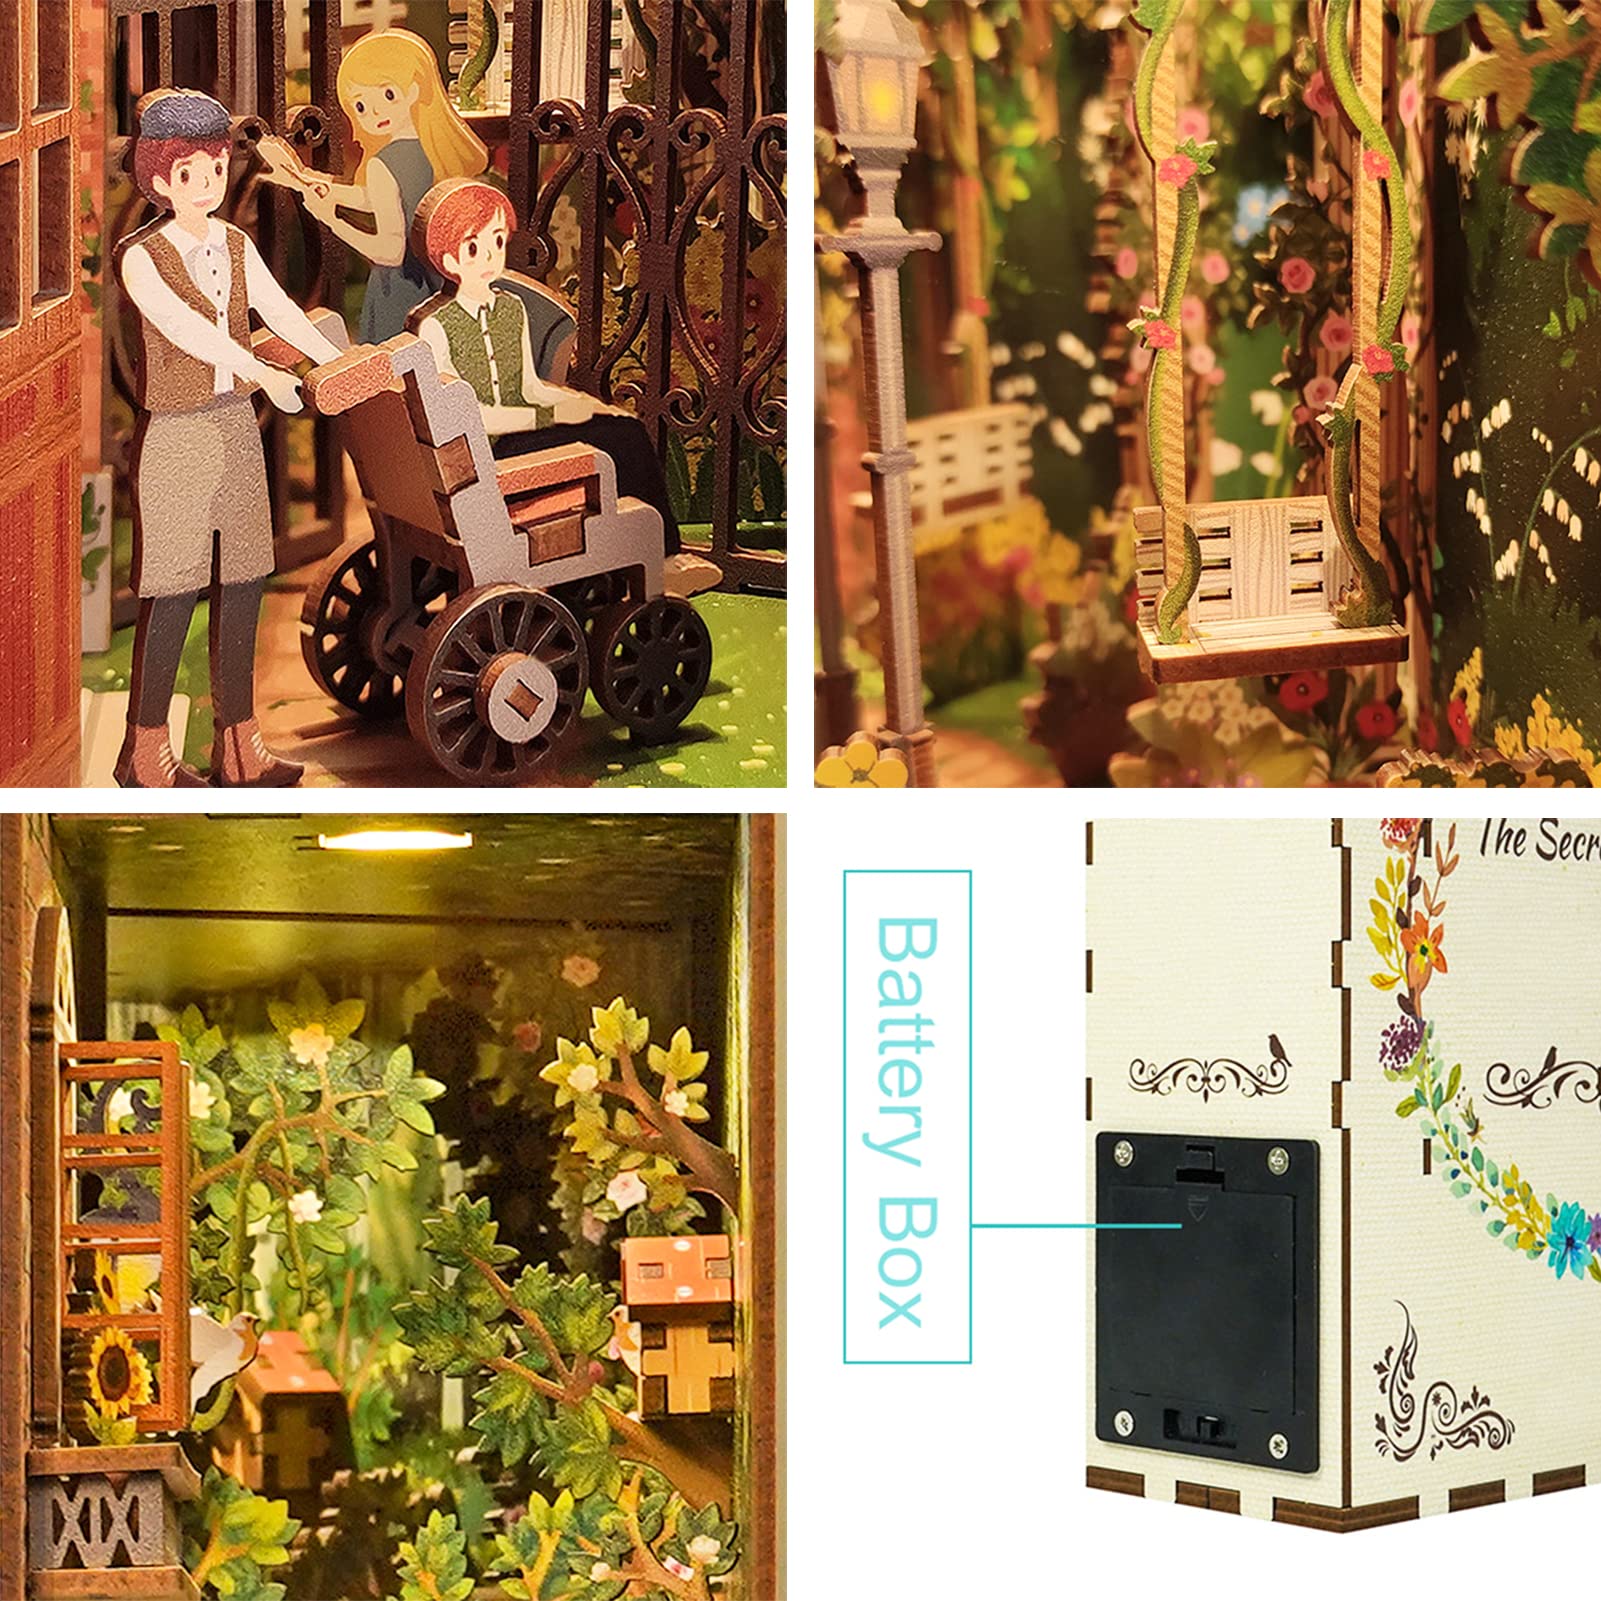 SPILAY DIY Dollhouse Miniature Book Nook Assemble Kit,3D Wooden Puzzle Bookshelf Insert Decor with Sensor Light,Bookends Model Build-Creativity Kit for Adults Birthday Gift (The Secret Garden)